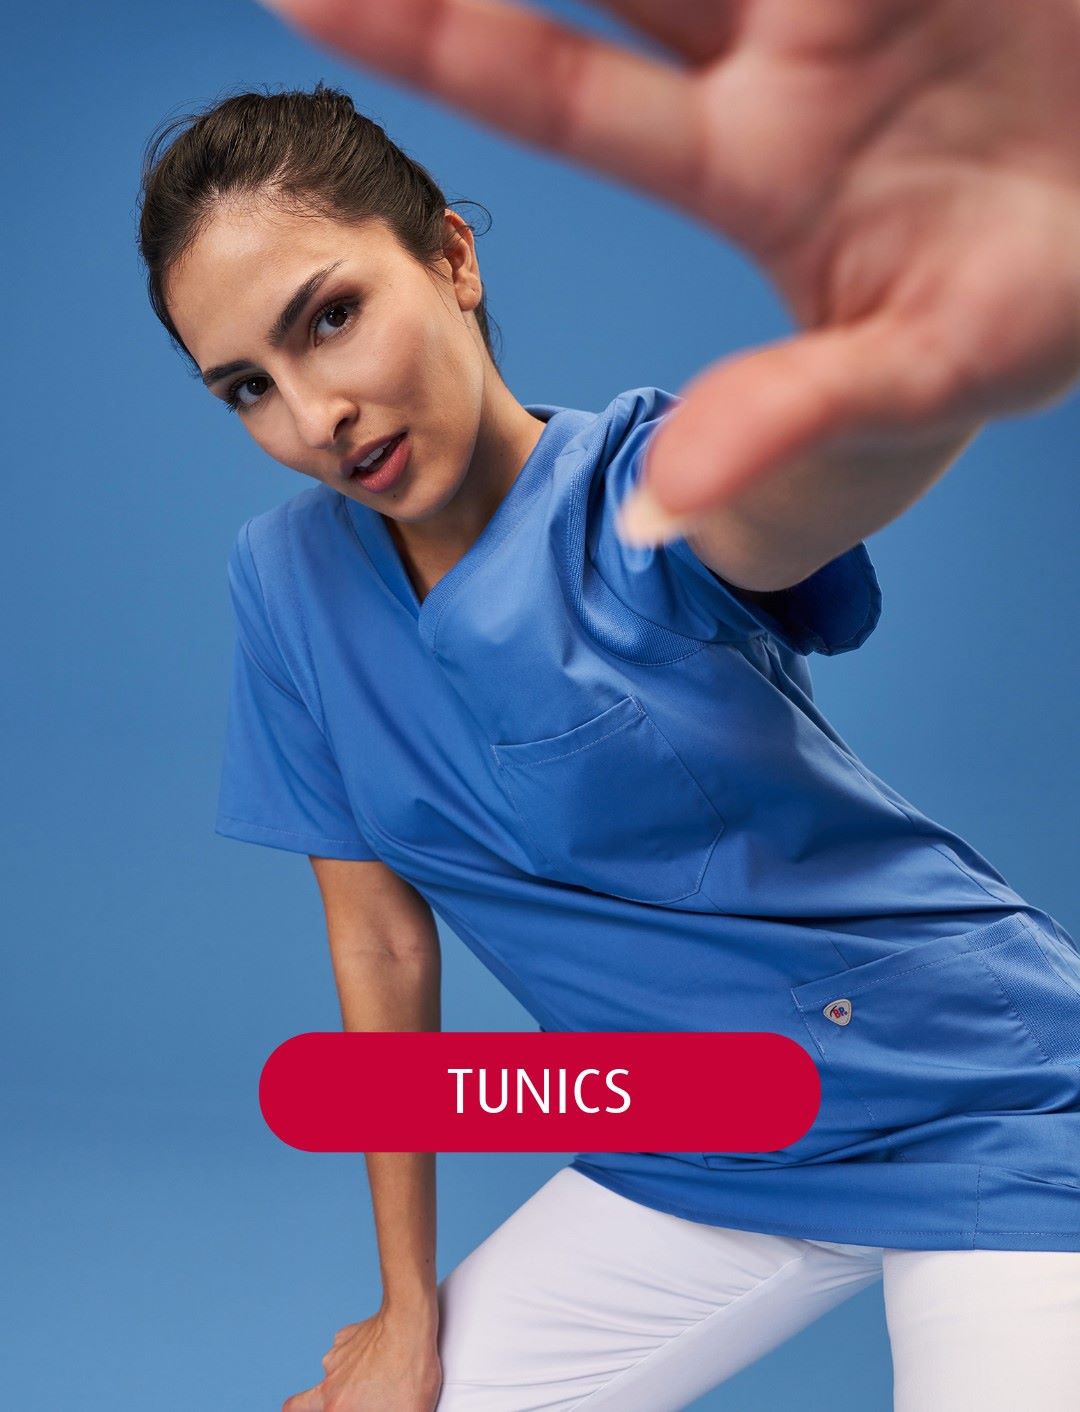 Nurse wearing a light blue tunic